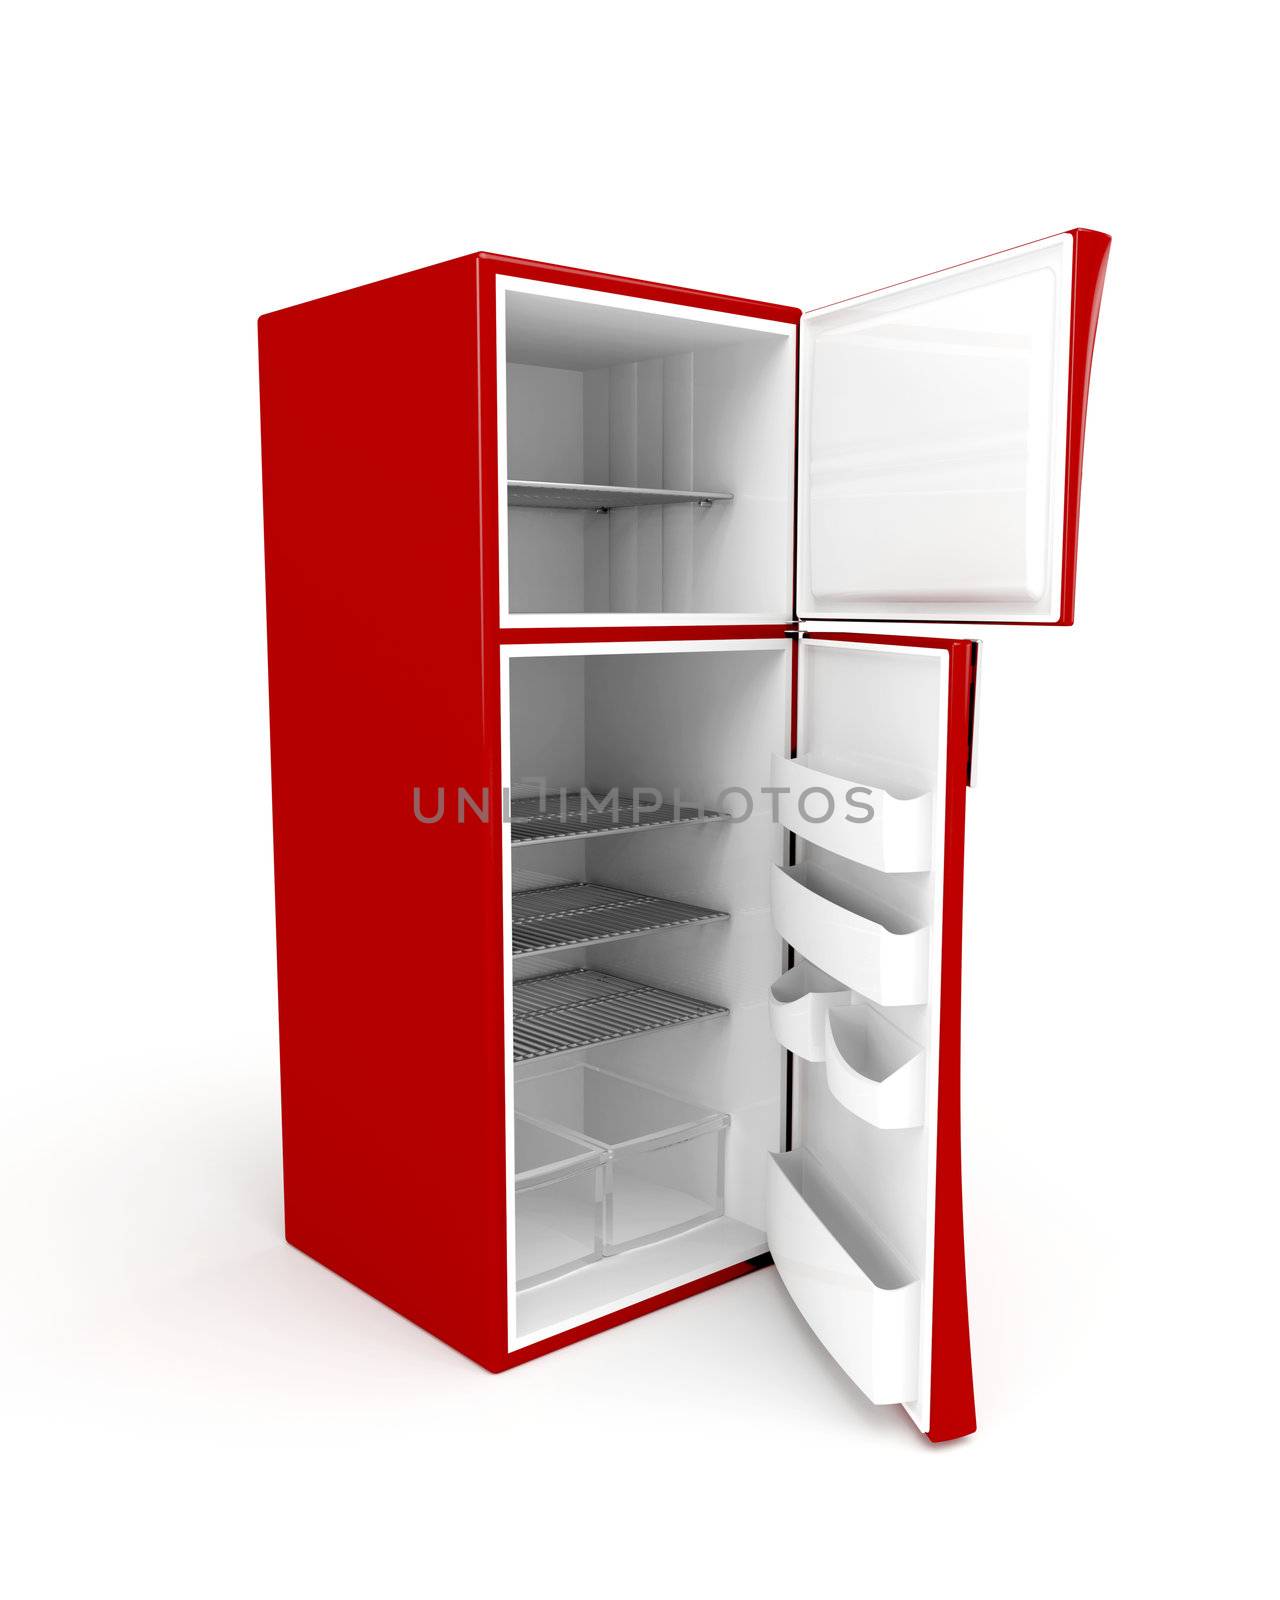 3d image of empty fridge with opened doors